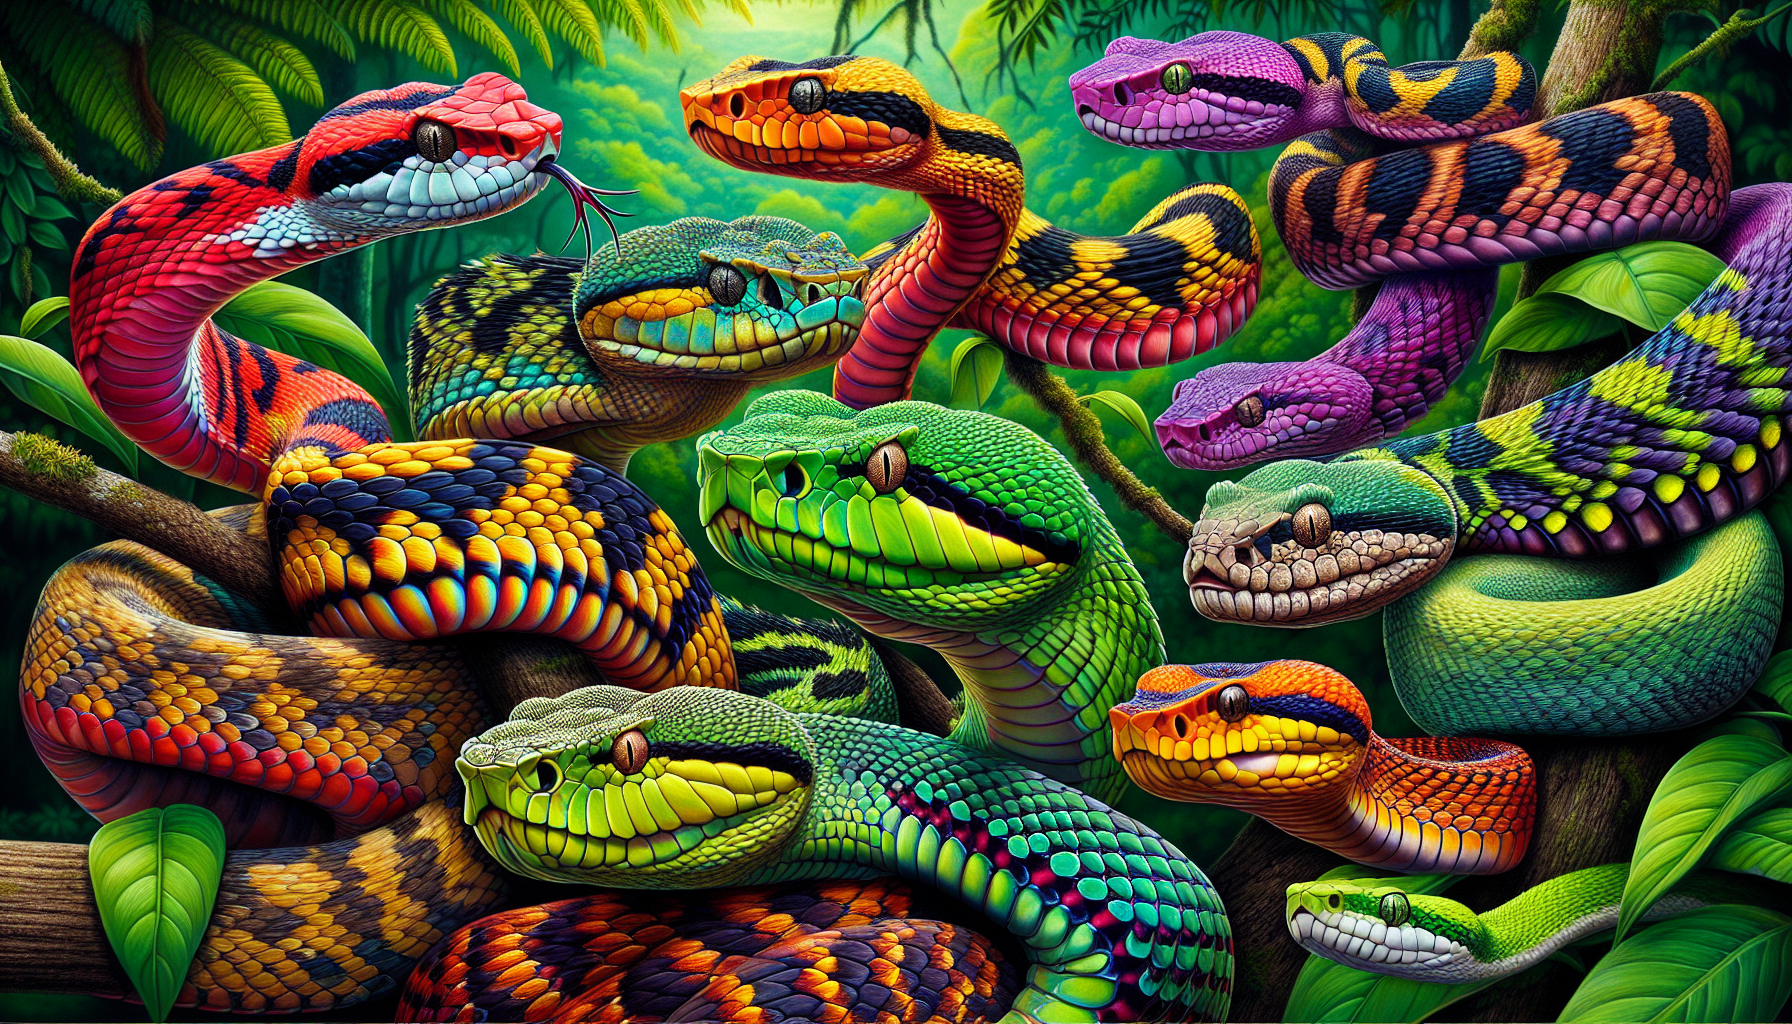 Venomous snakes of Costa Rica